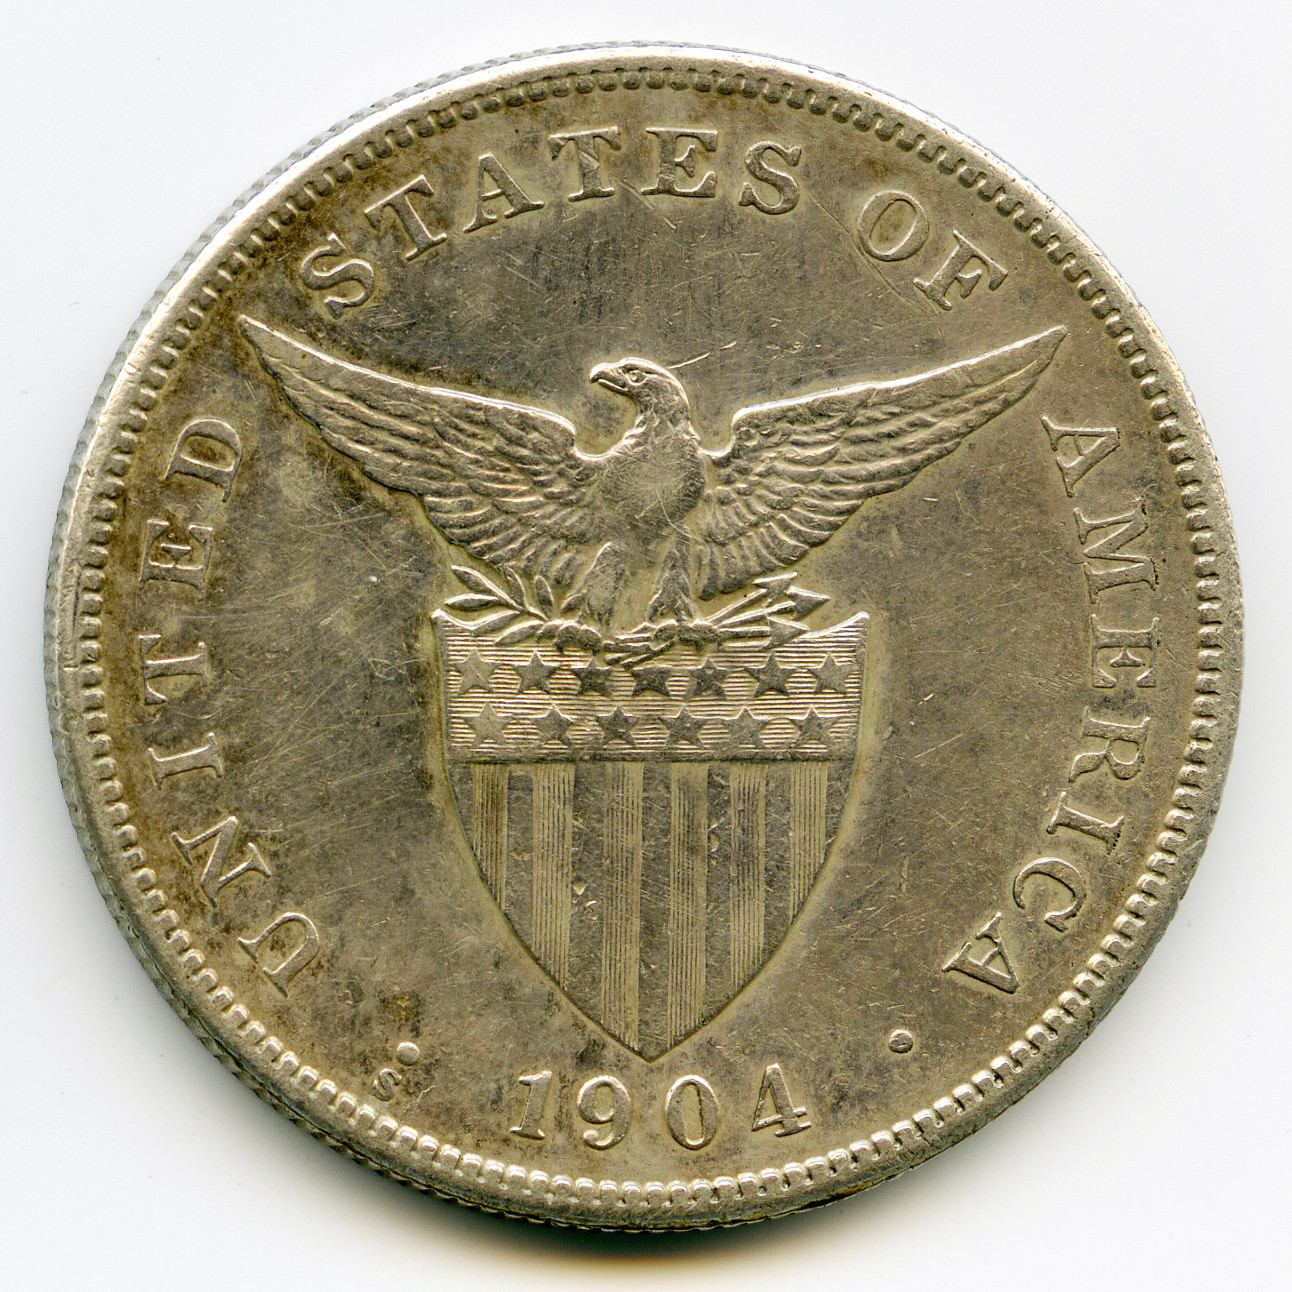 Philippines - 1 Peso - 1904 S revers